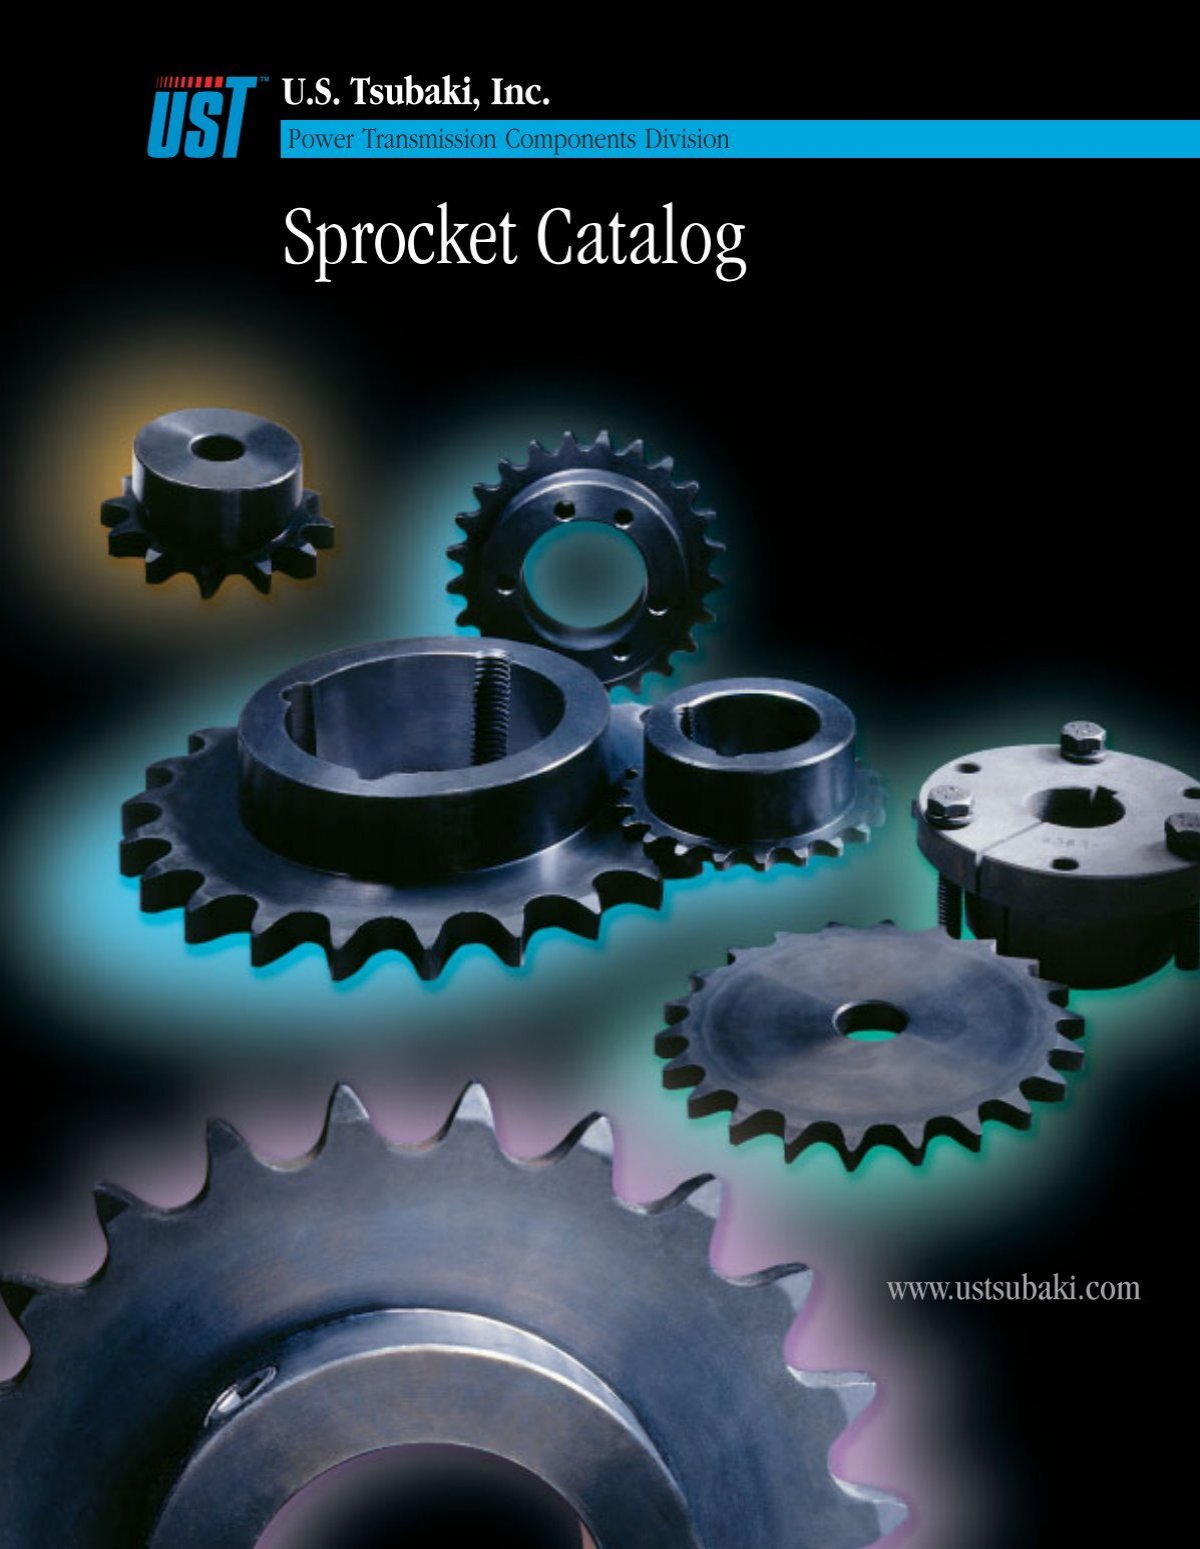 Sprocket Catalog - U.S. Tsubaki, Inc.